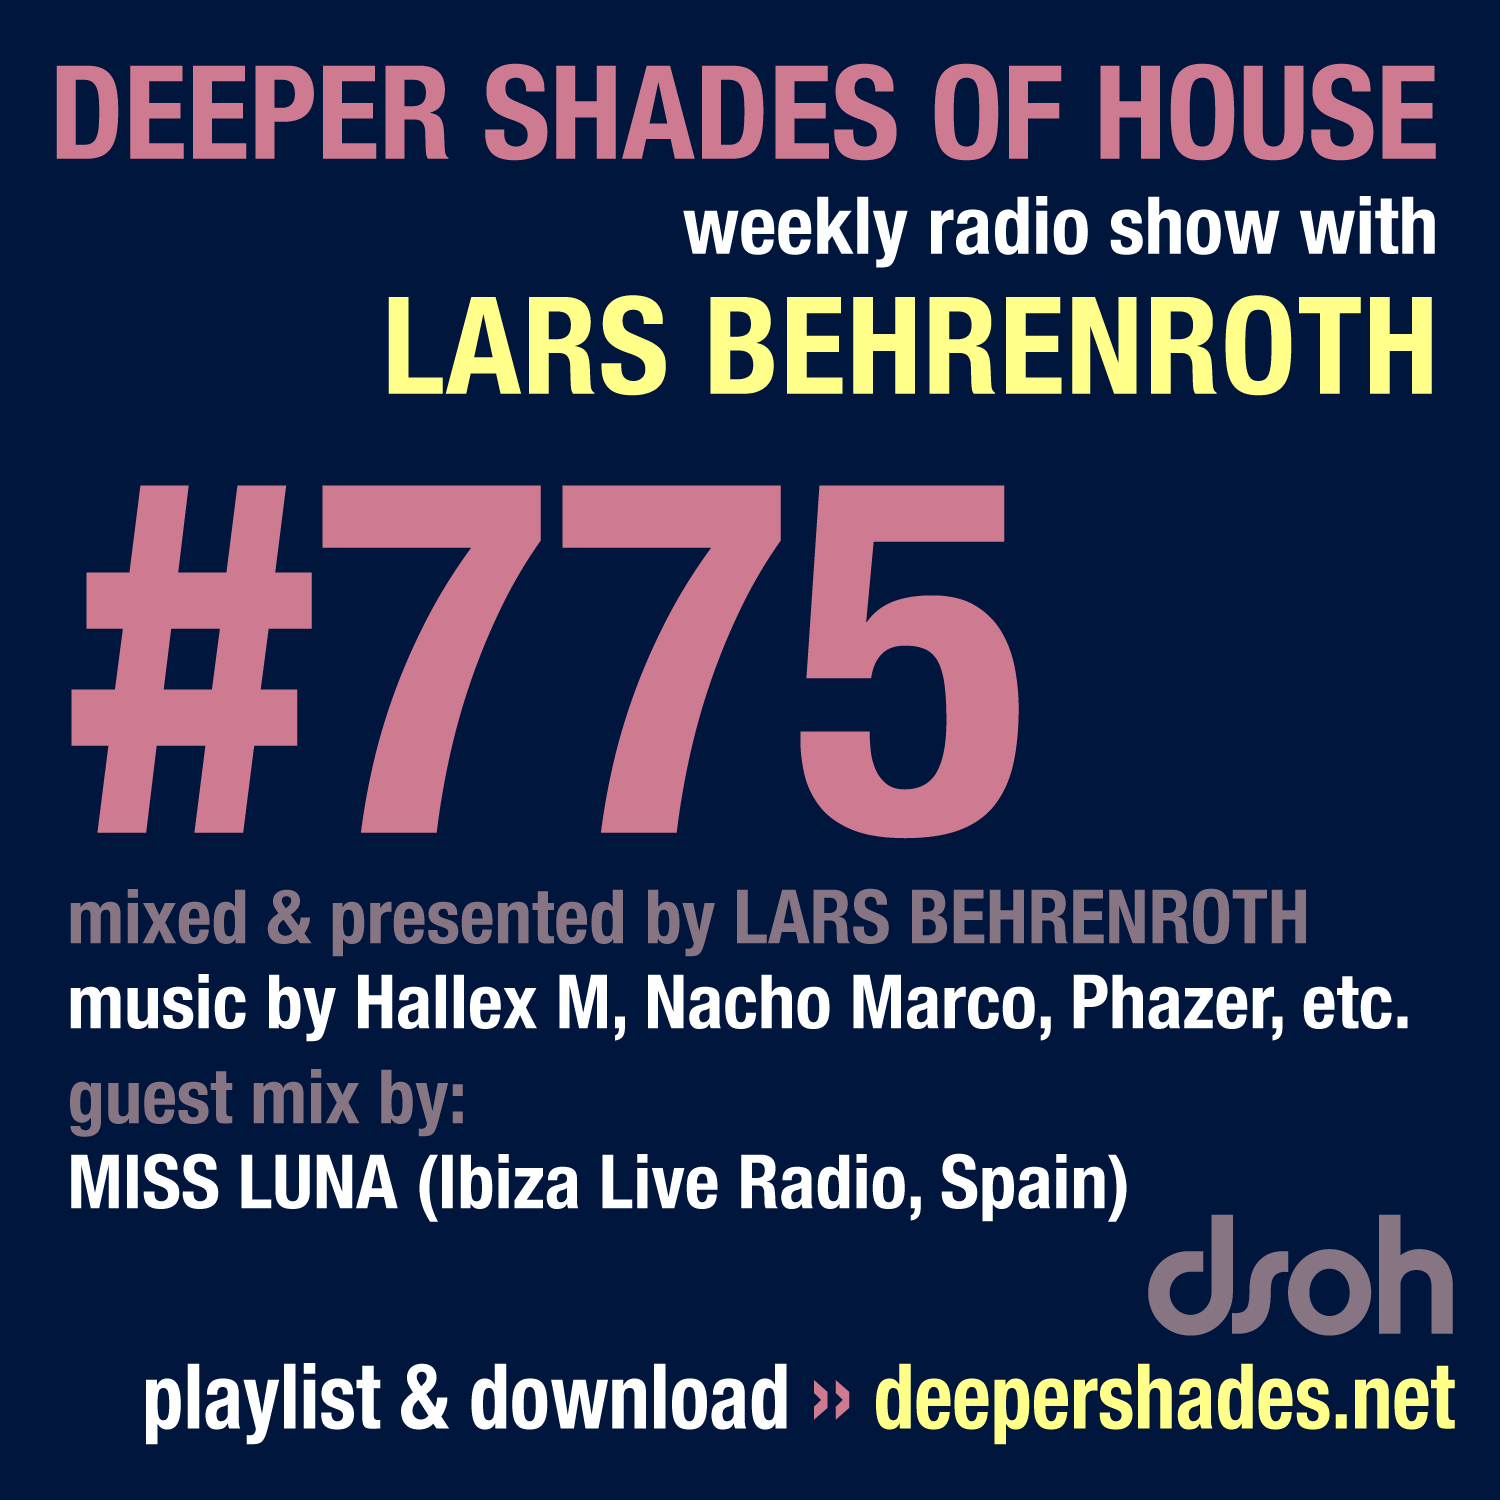 Deep House Radio Show Deeper Shades Of House 775